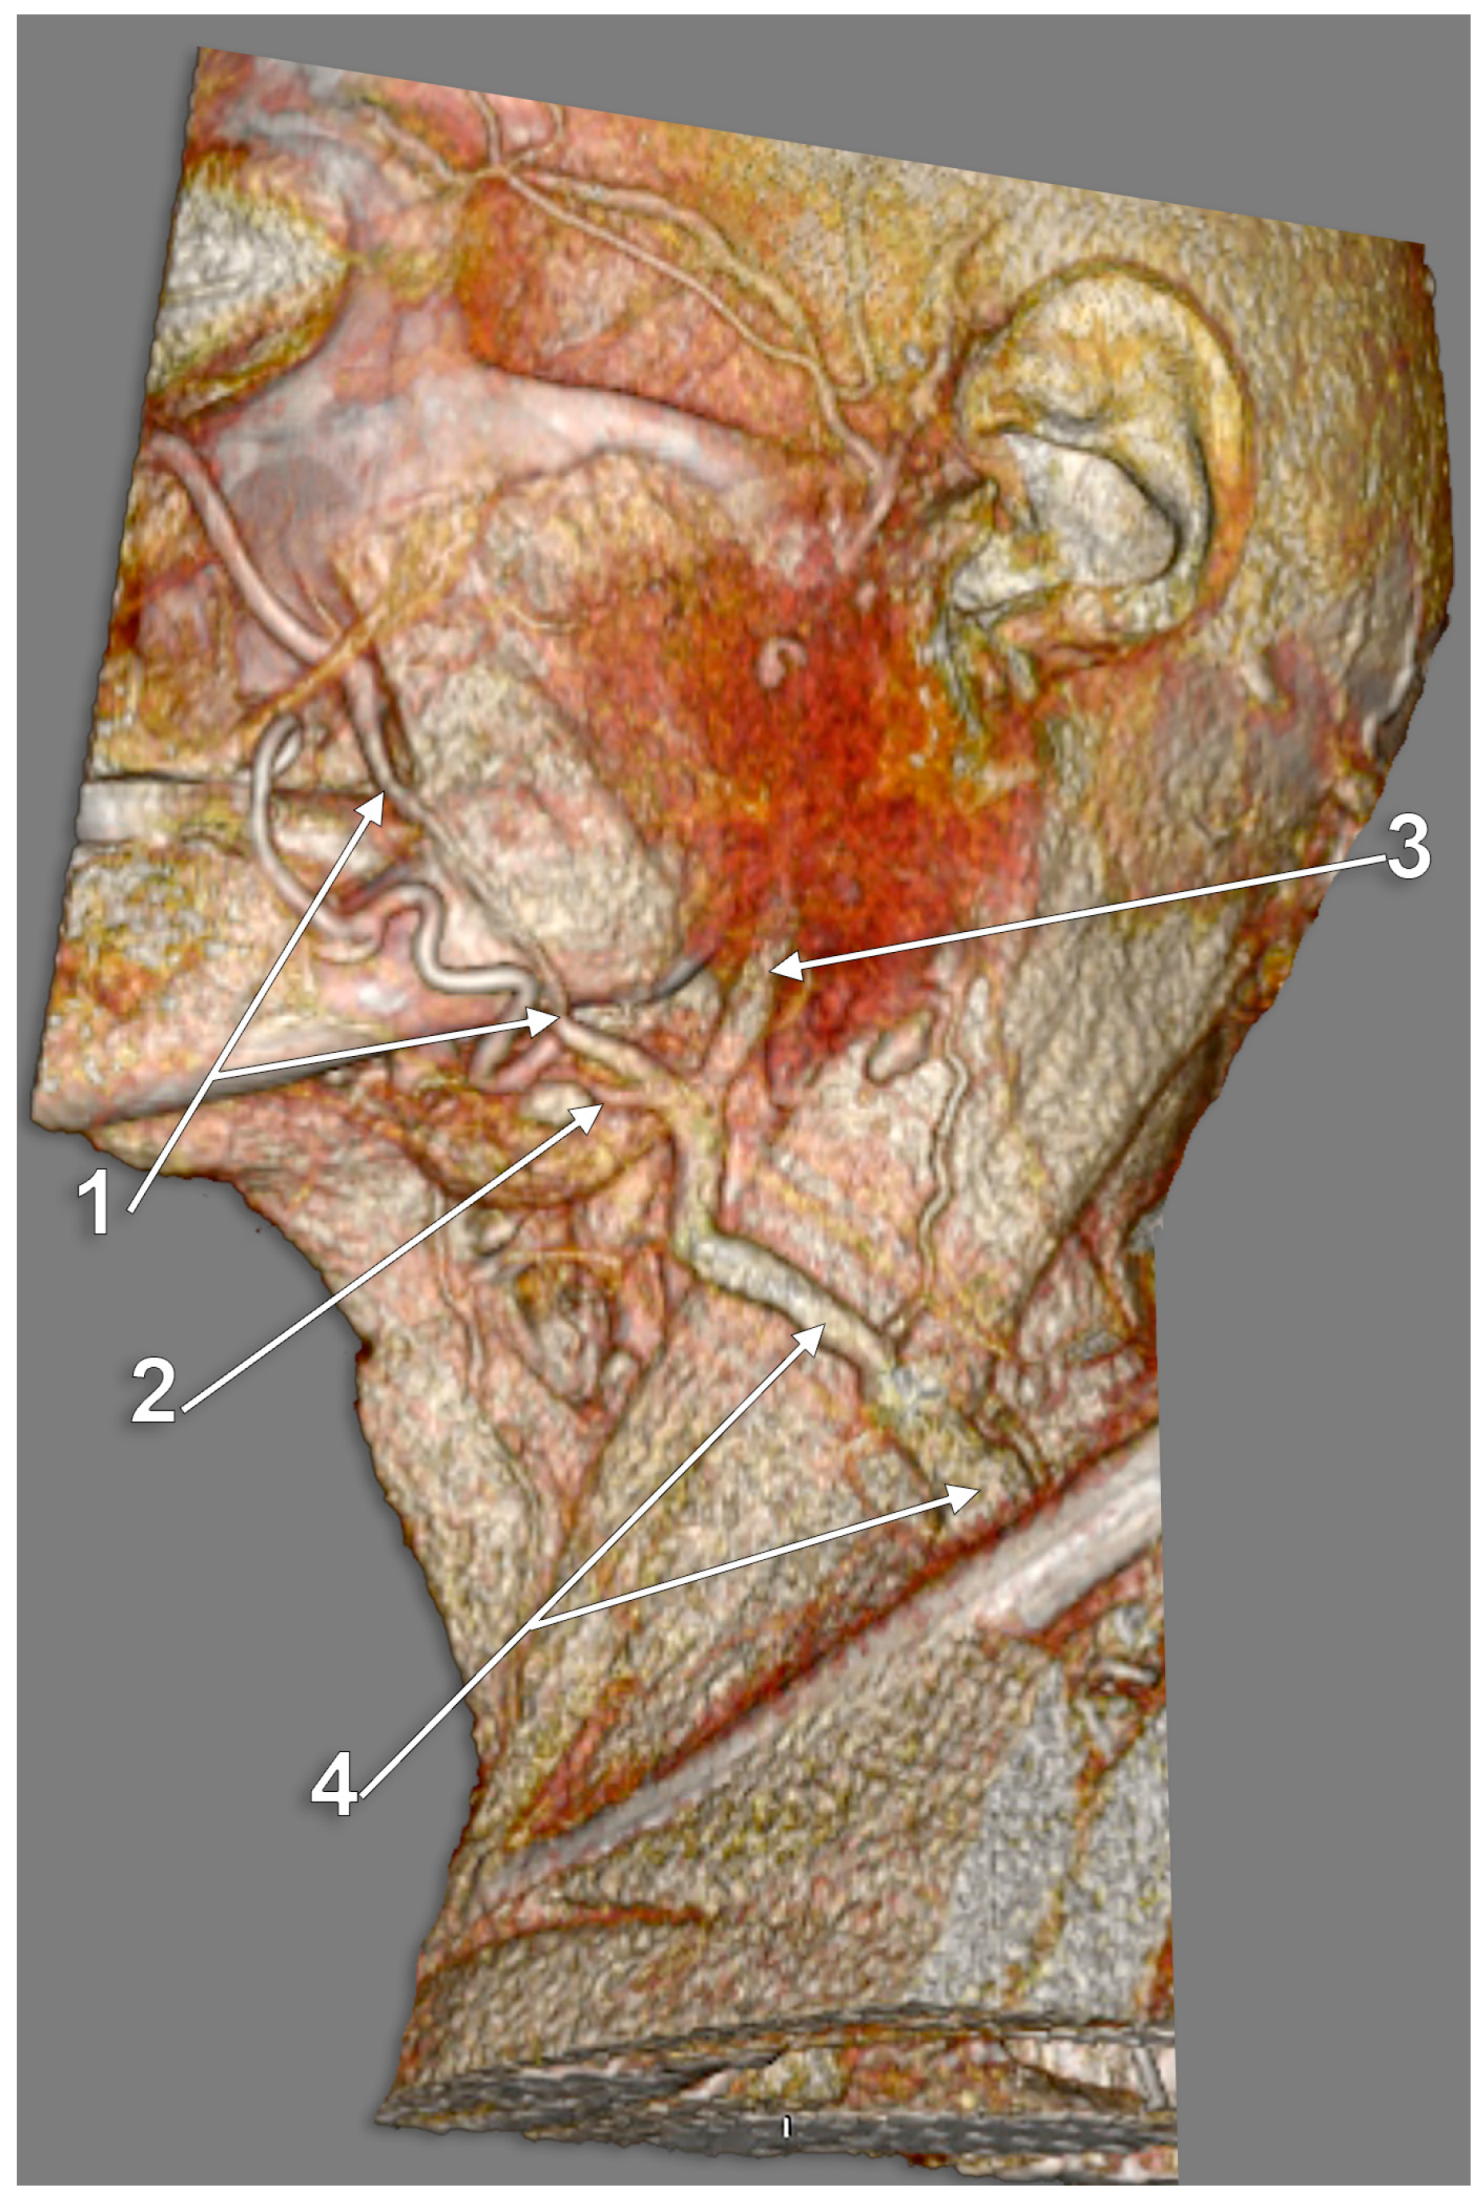 carotid versus jugular venous distention